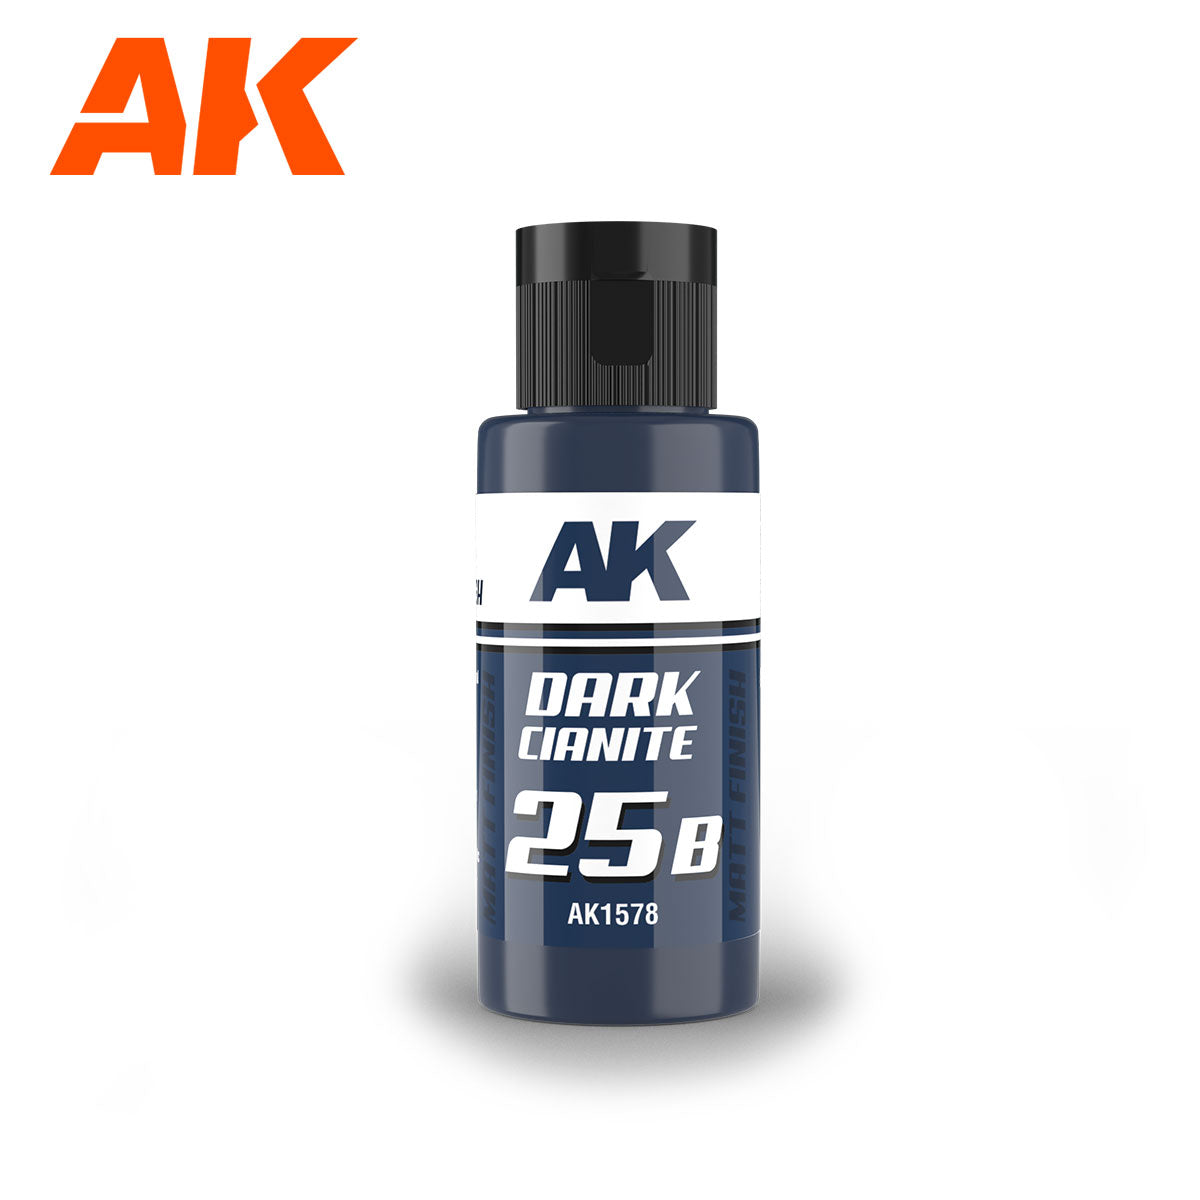 AK Interactive Dual Exo 25B Dark Cianite 60ml